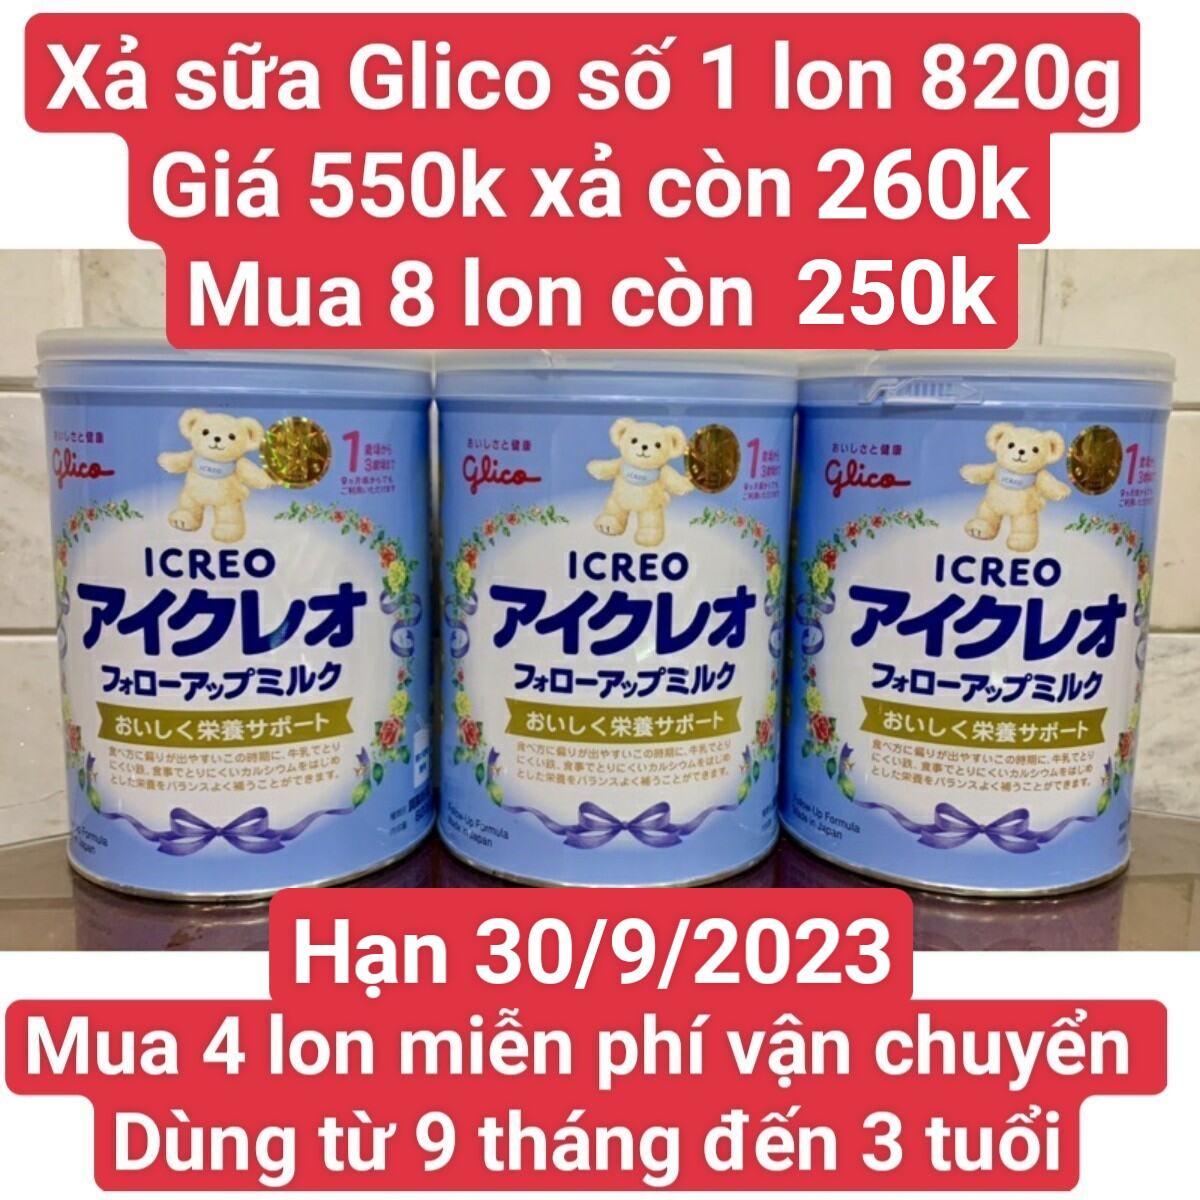 Sữa glico số 1 hạn 30 9 2023 của Nhật Bản lon 820g